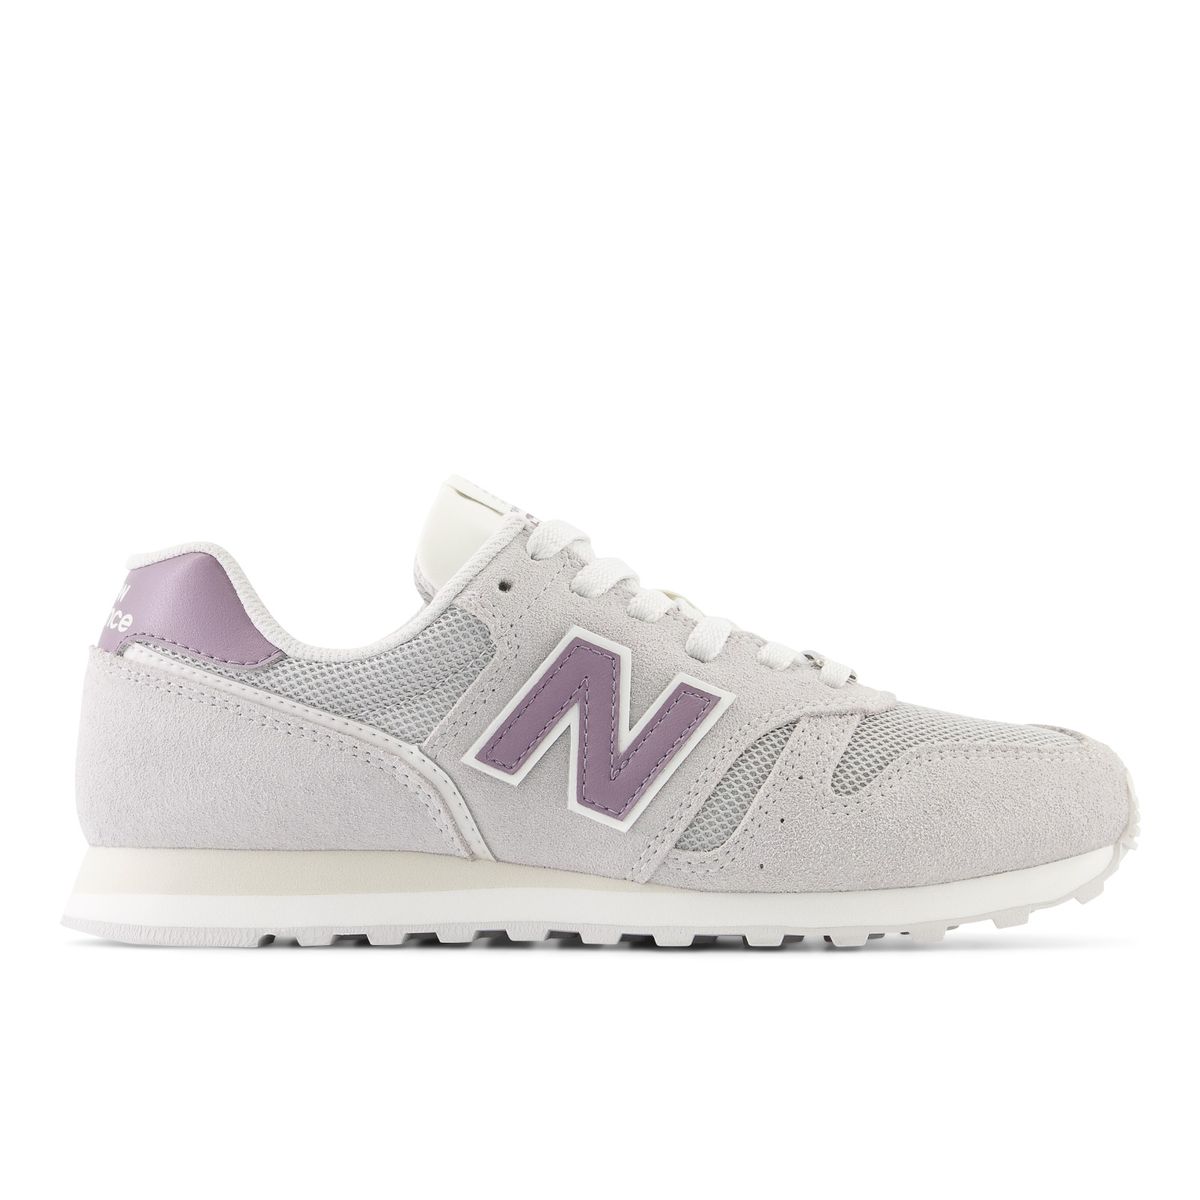 New Balance Women's 373 v2 Lifestyle Shoes - Grey/Purple | Shop Today ...